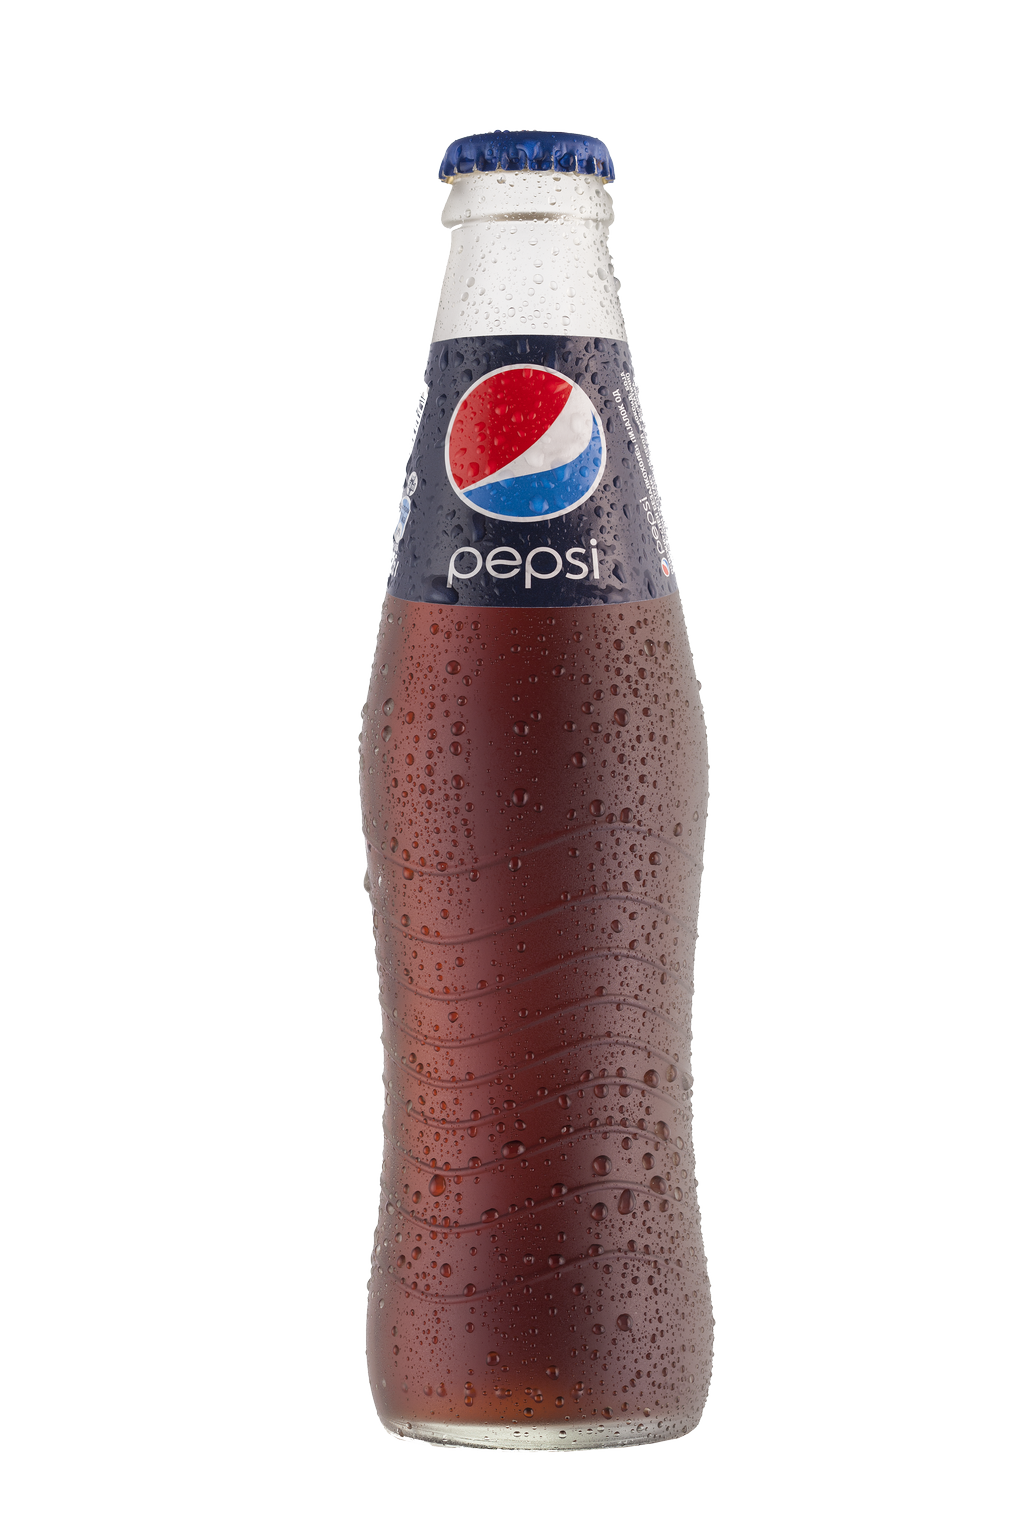 Pepsi PNG image